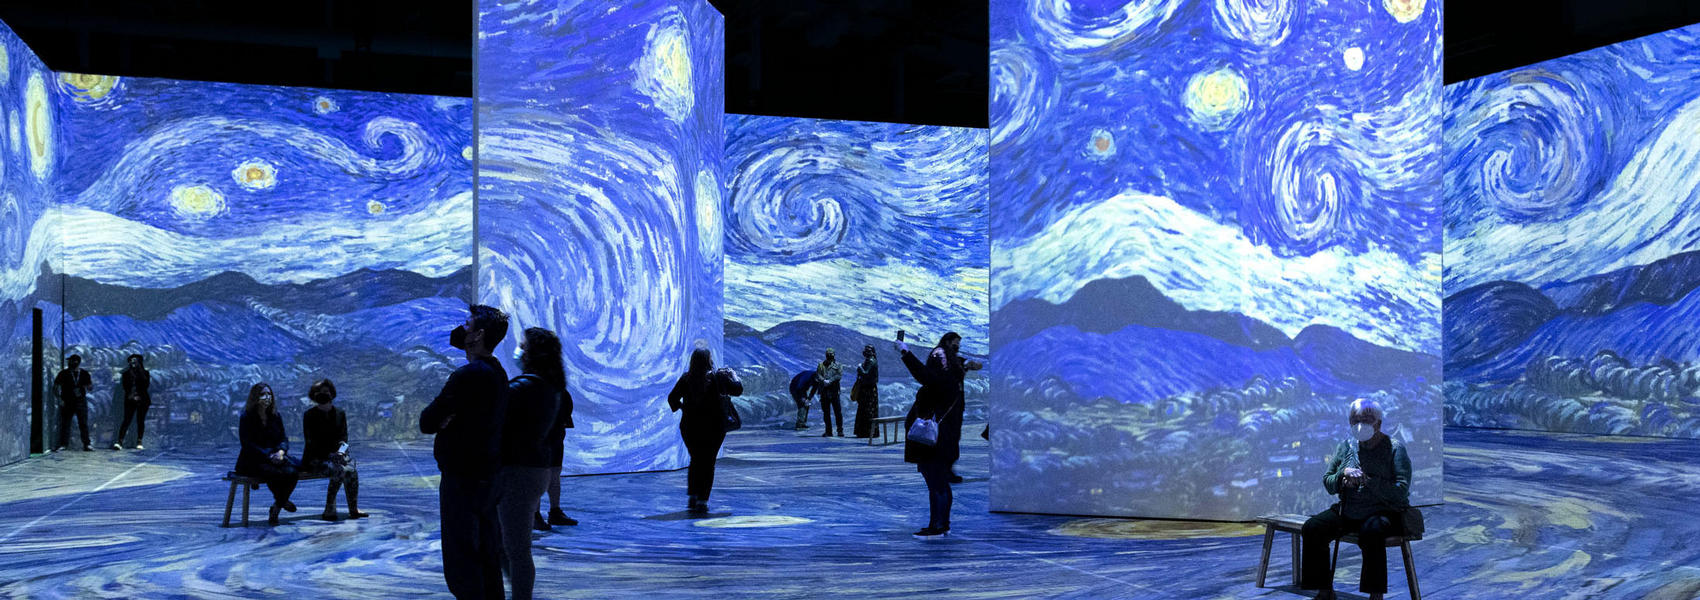 Beyond Van Gogh Experience Starry Night